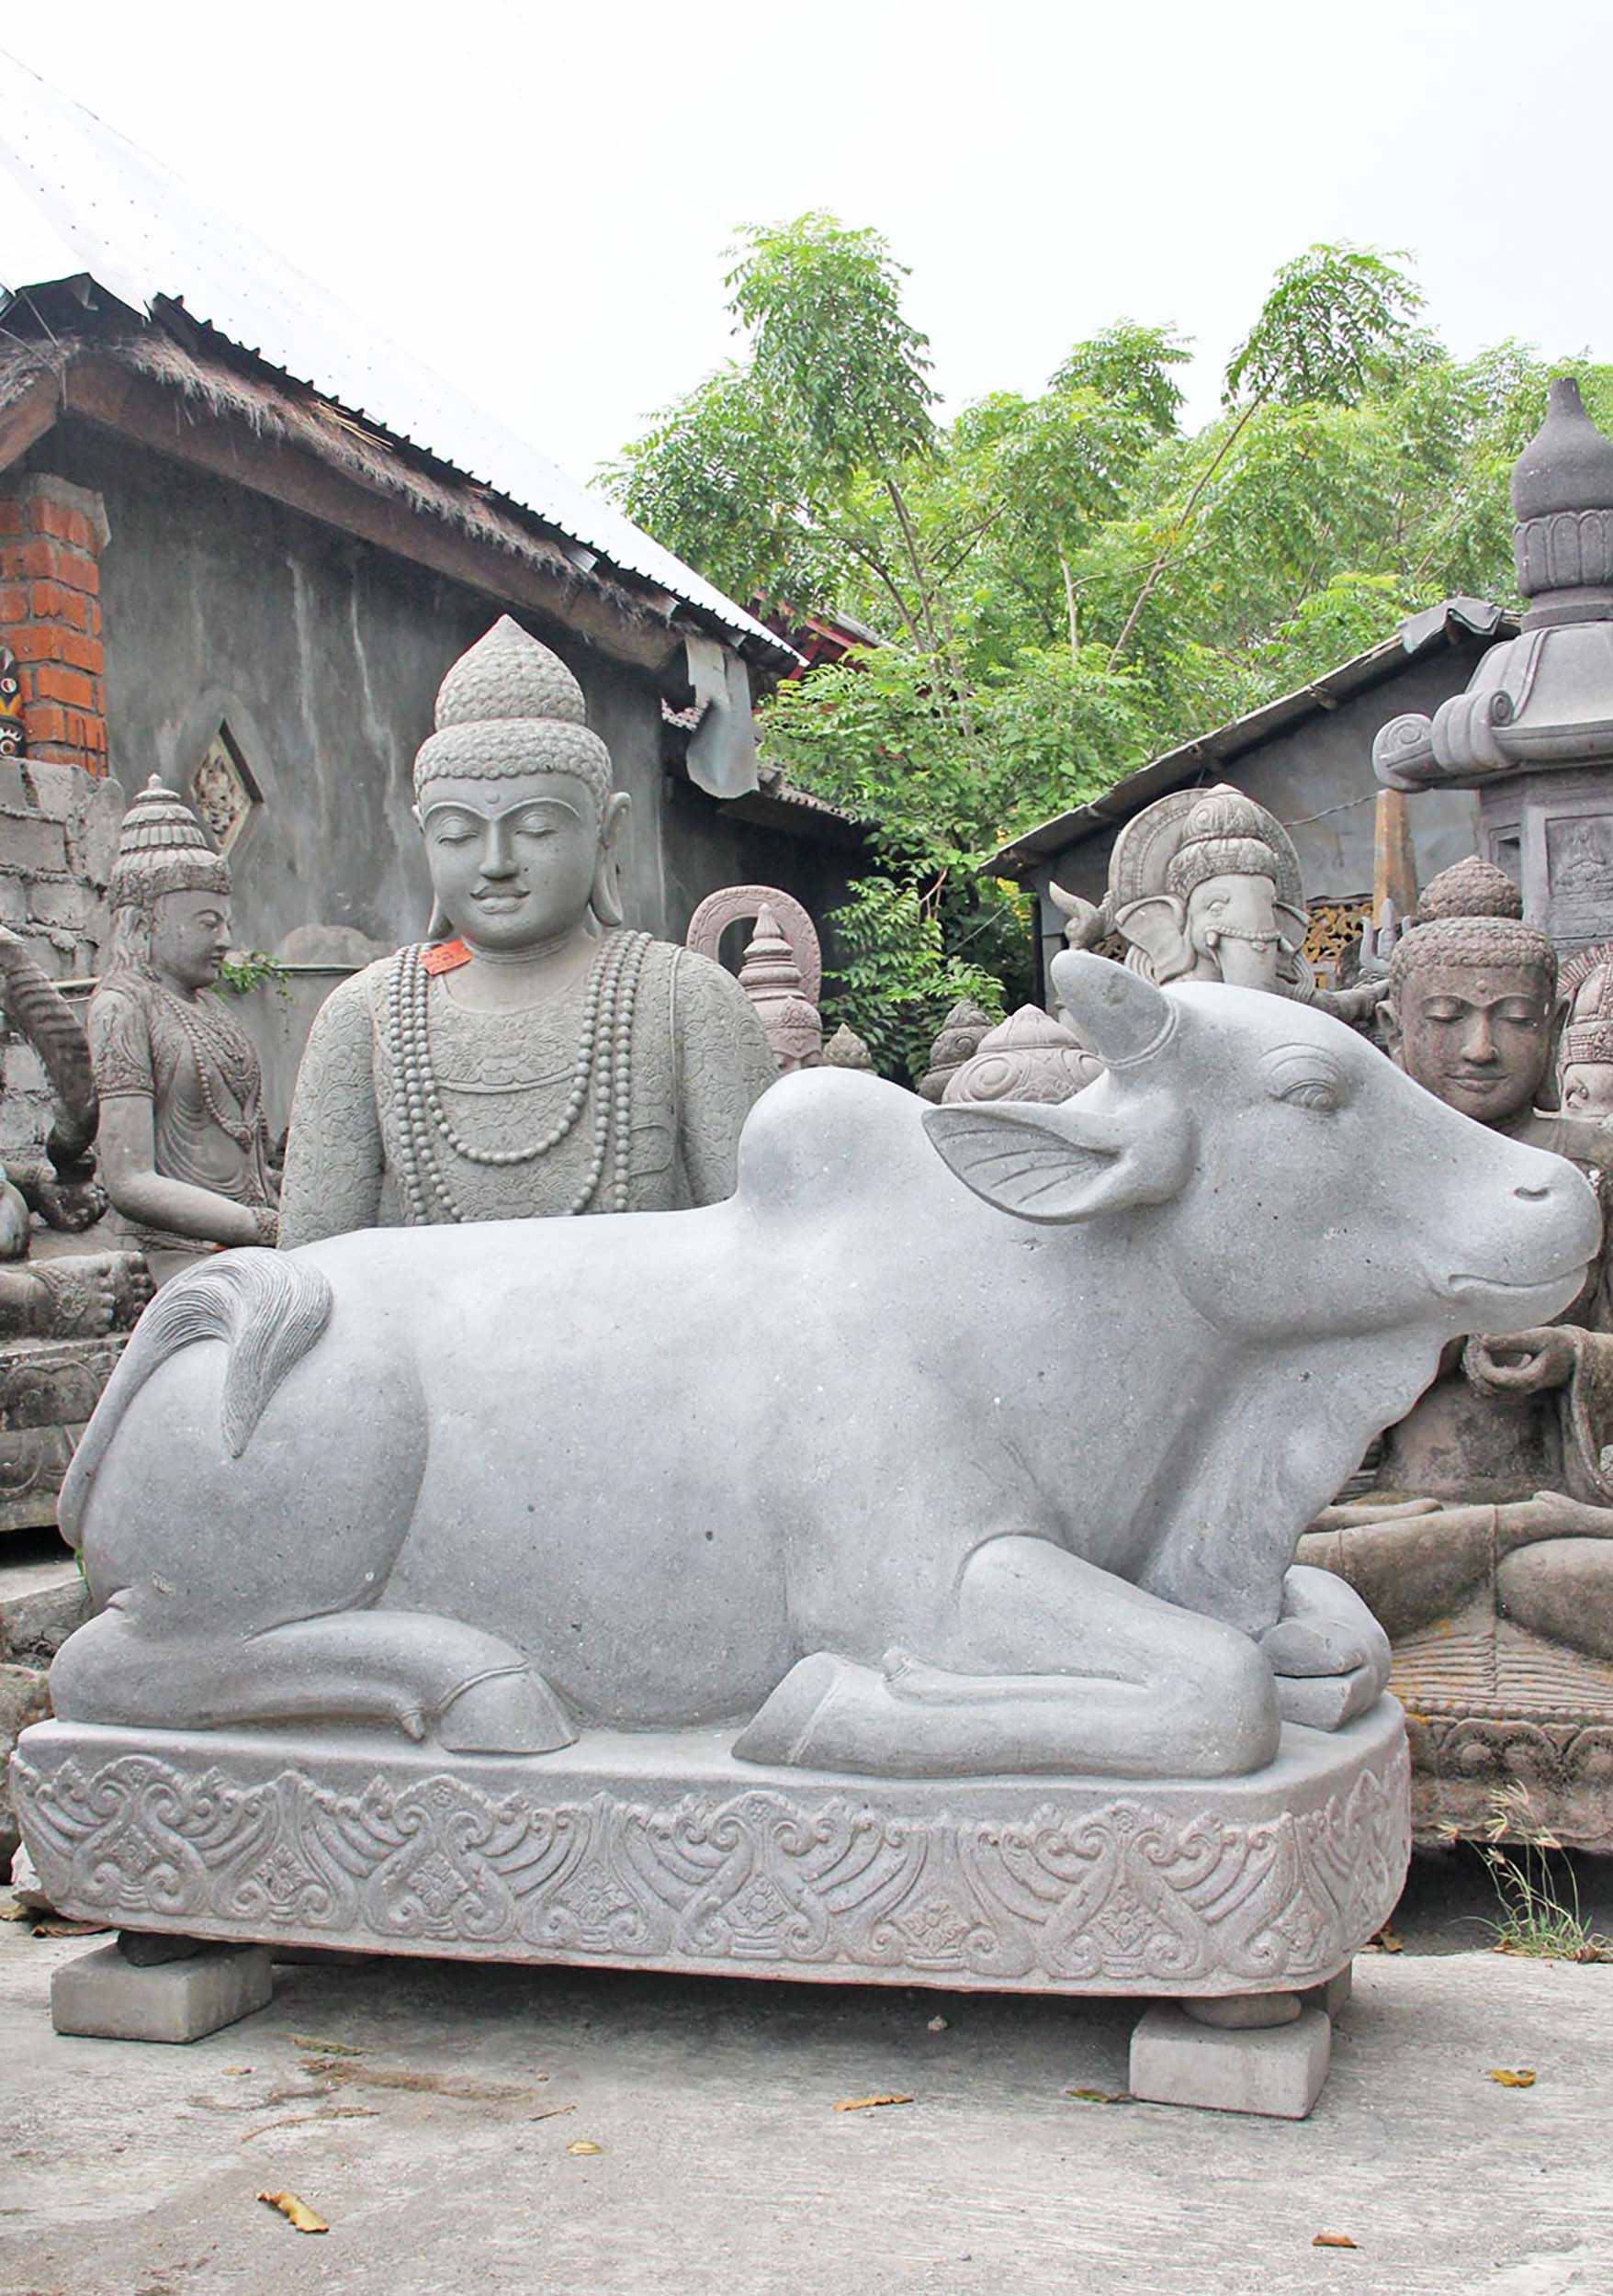 Sold Masterpiece Stone Nandi Temple Sculpture 83 105ls190 Hindu Gods And Buddha Statues